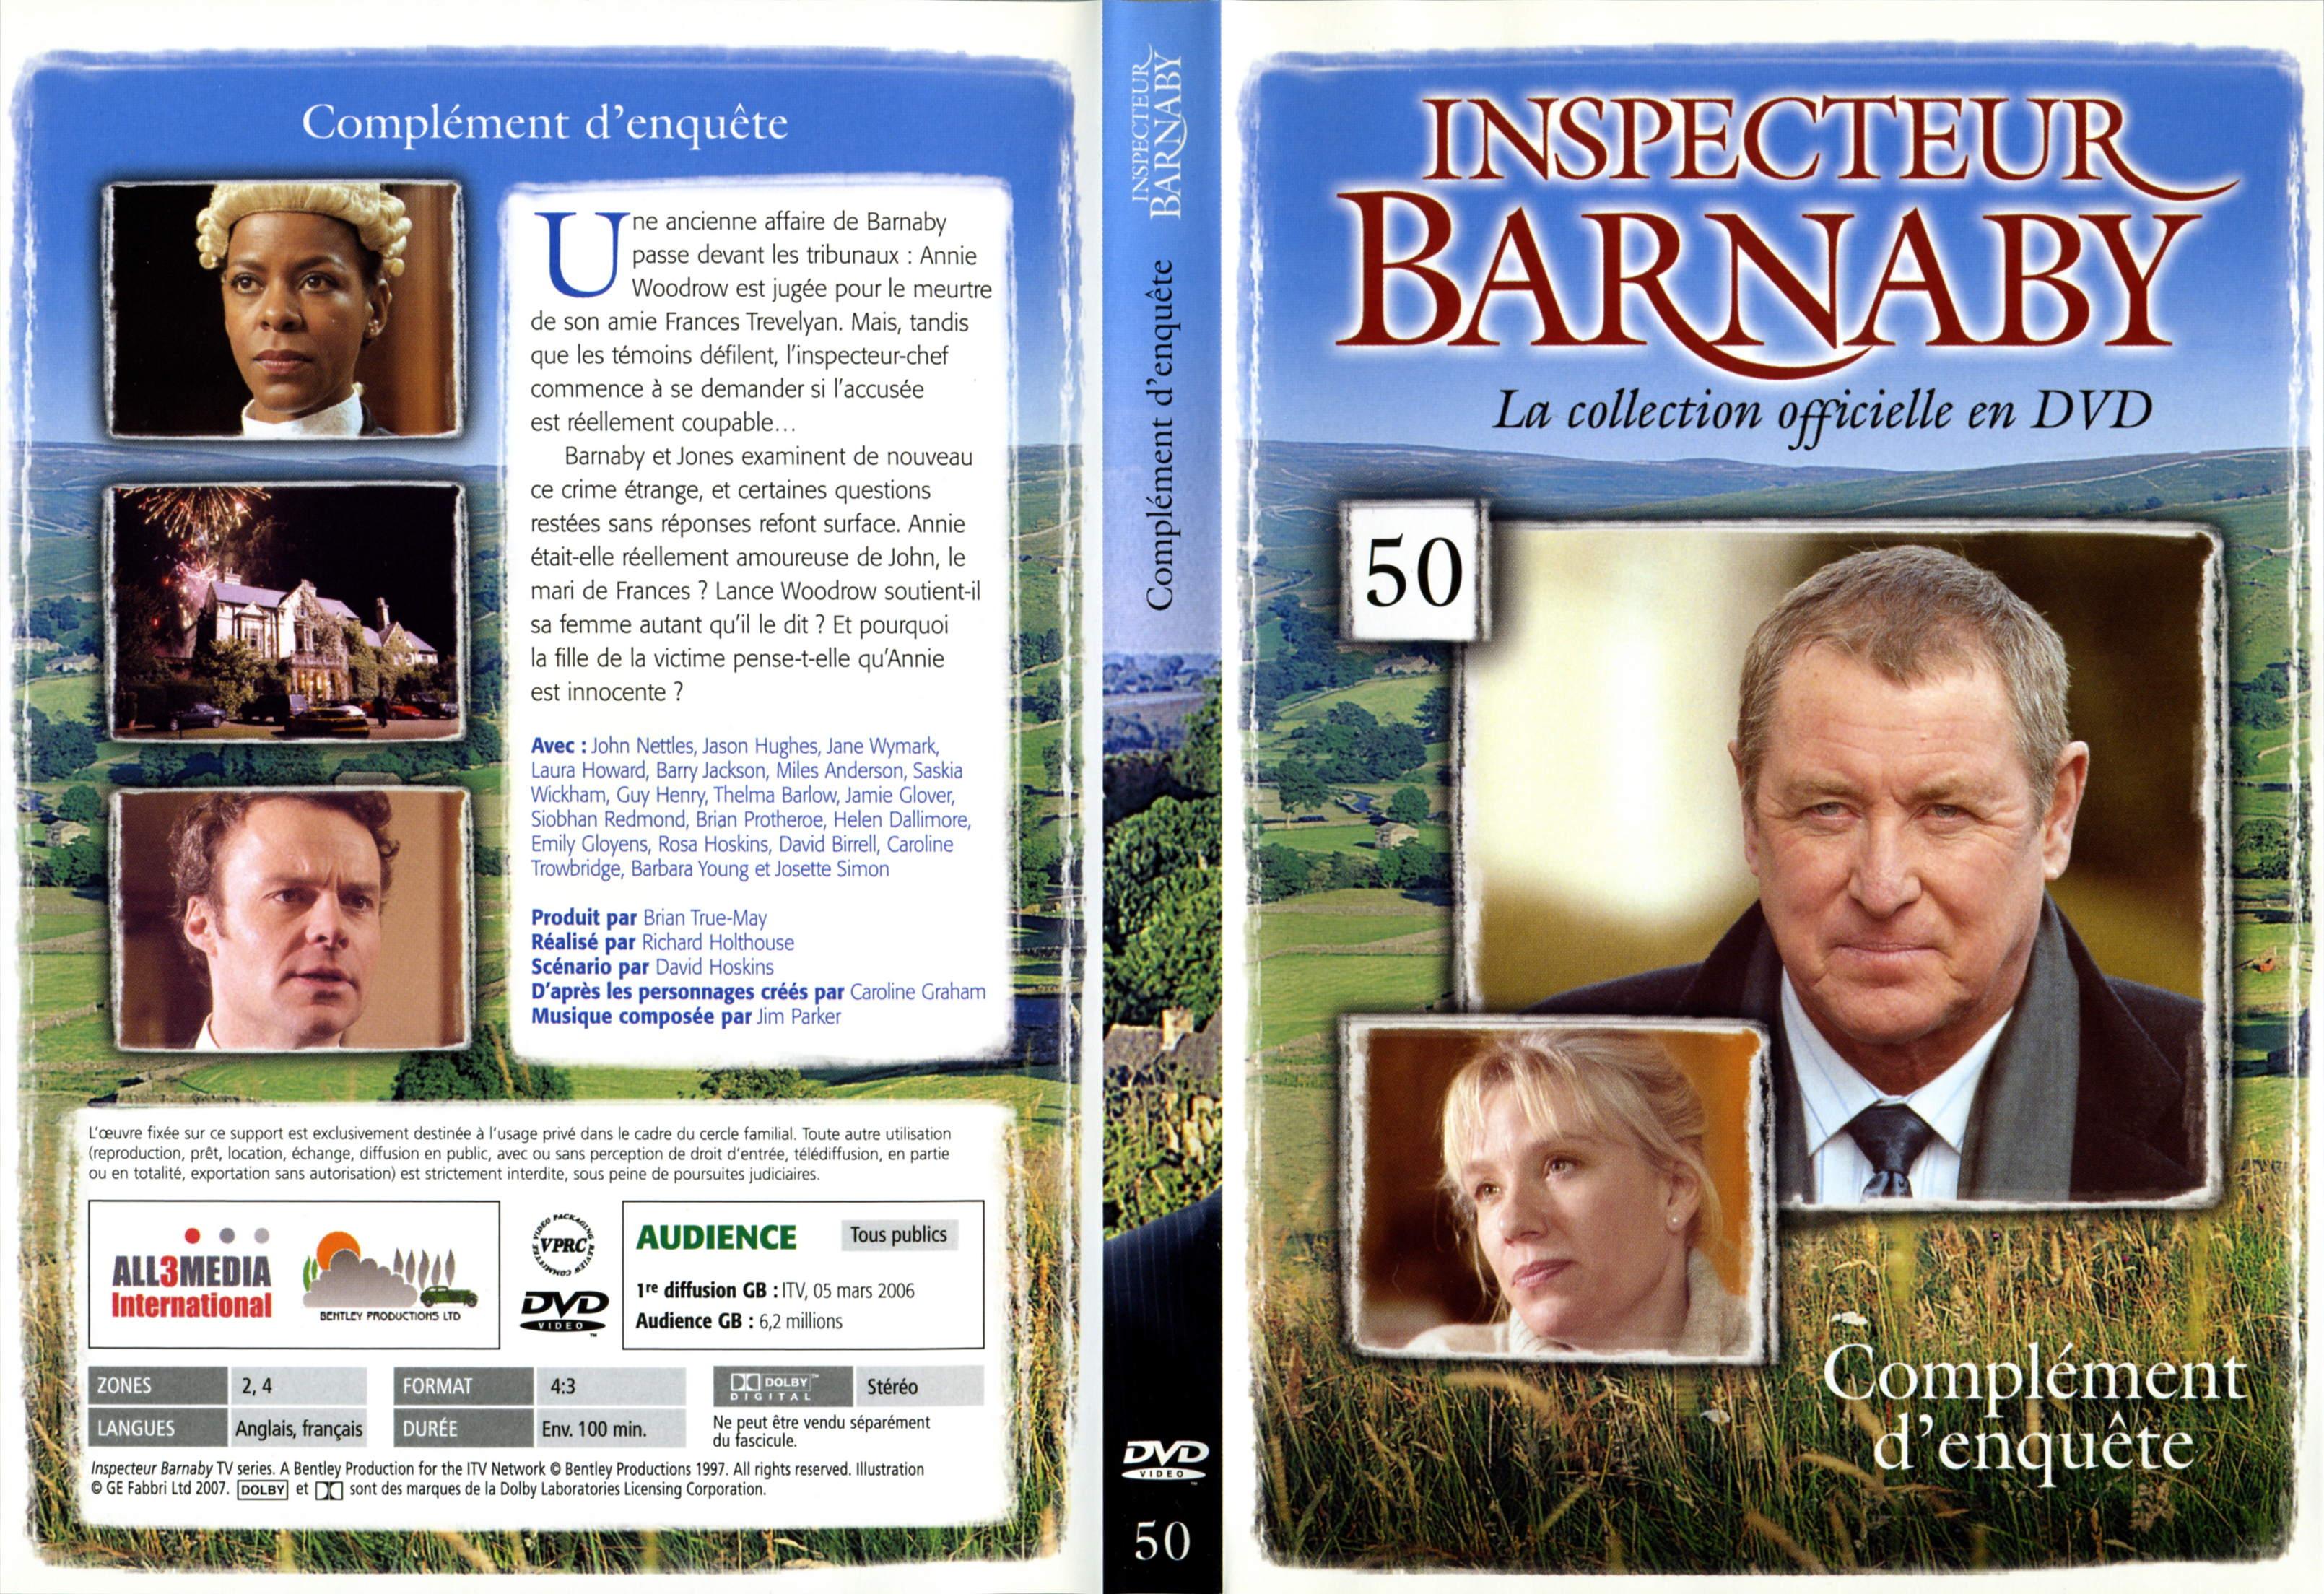 Jaquette DVD Barnaby vol 50 - Complment d